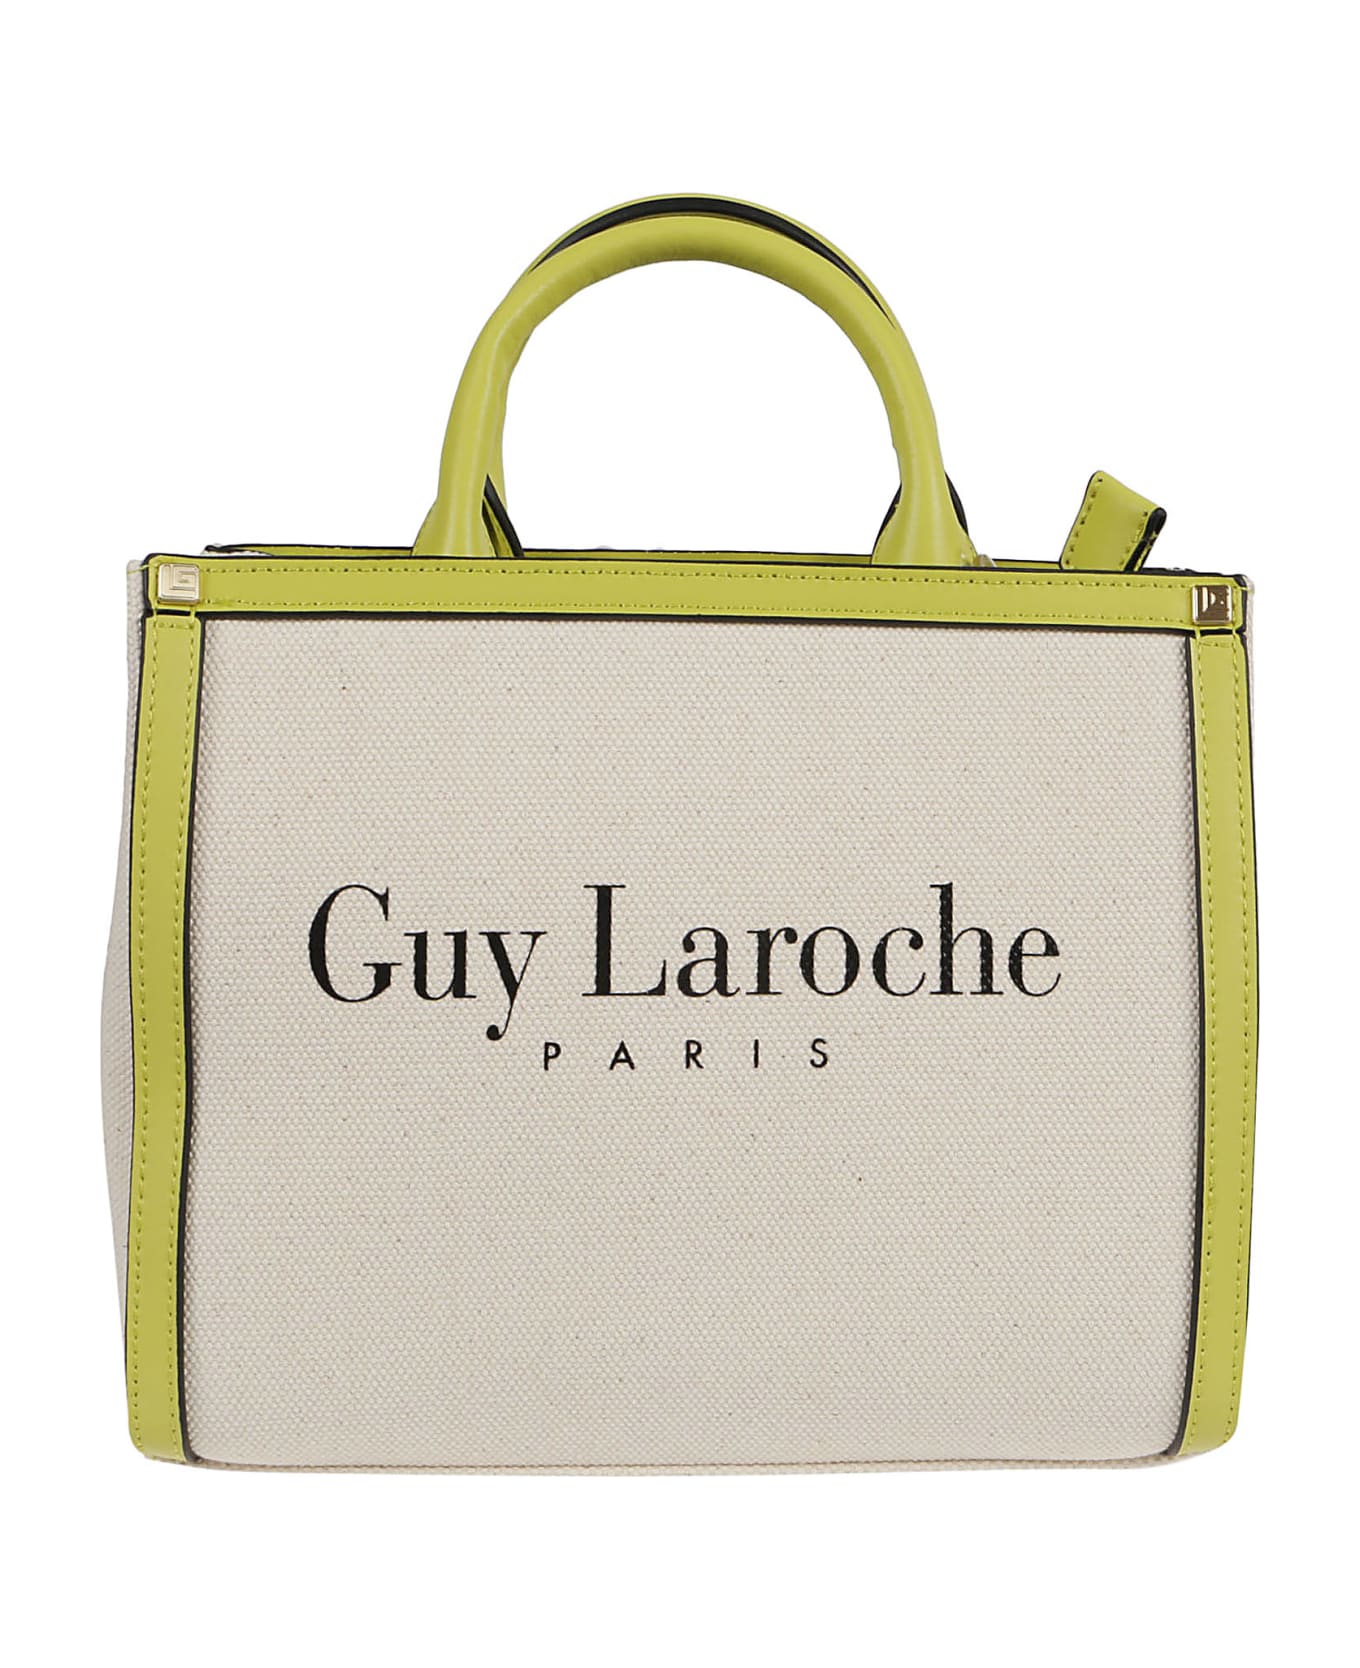 Guy Laroche Small Tote Bag - Natural/lime